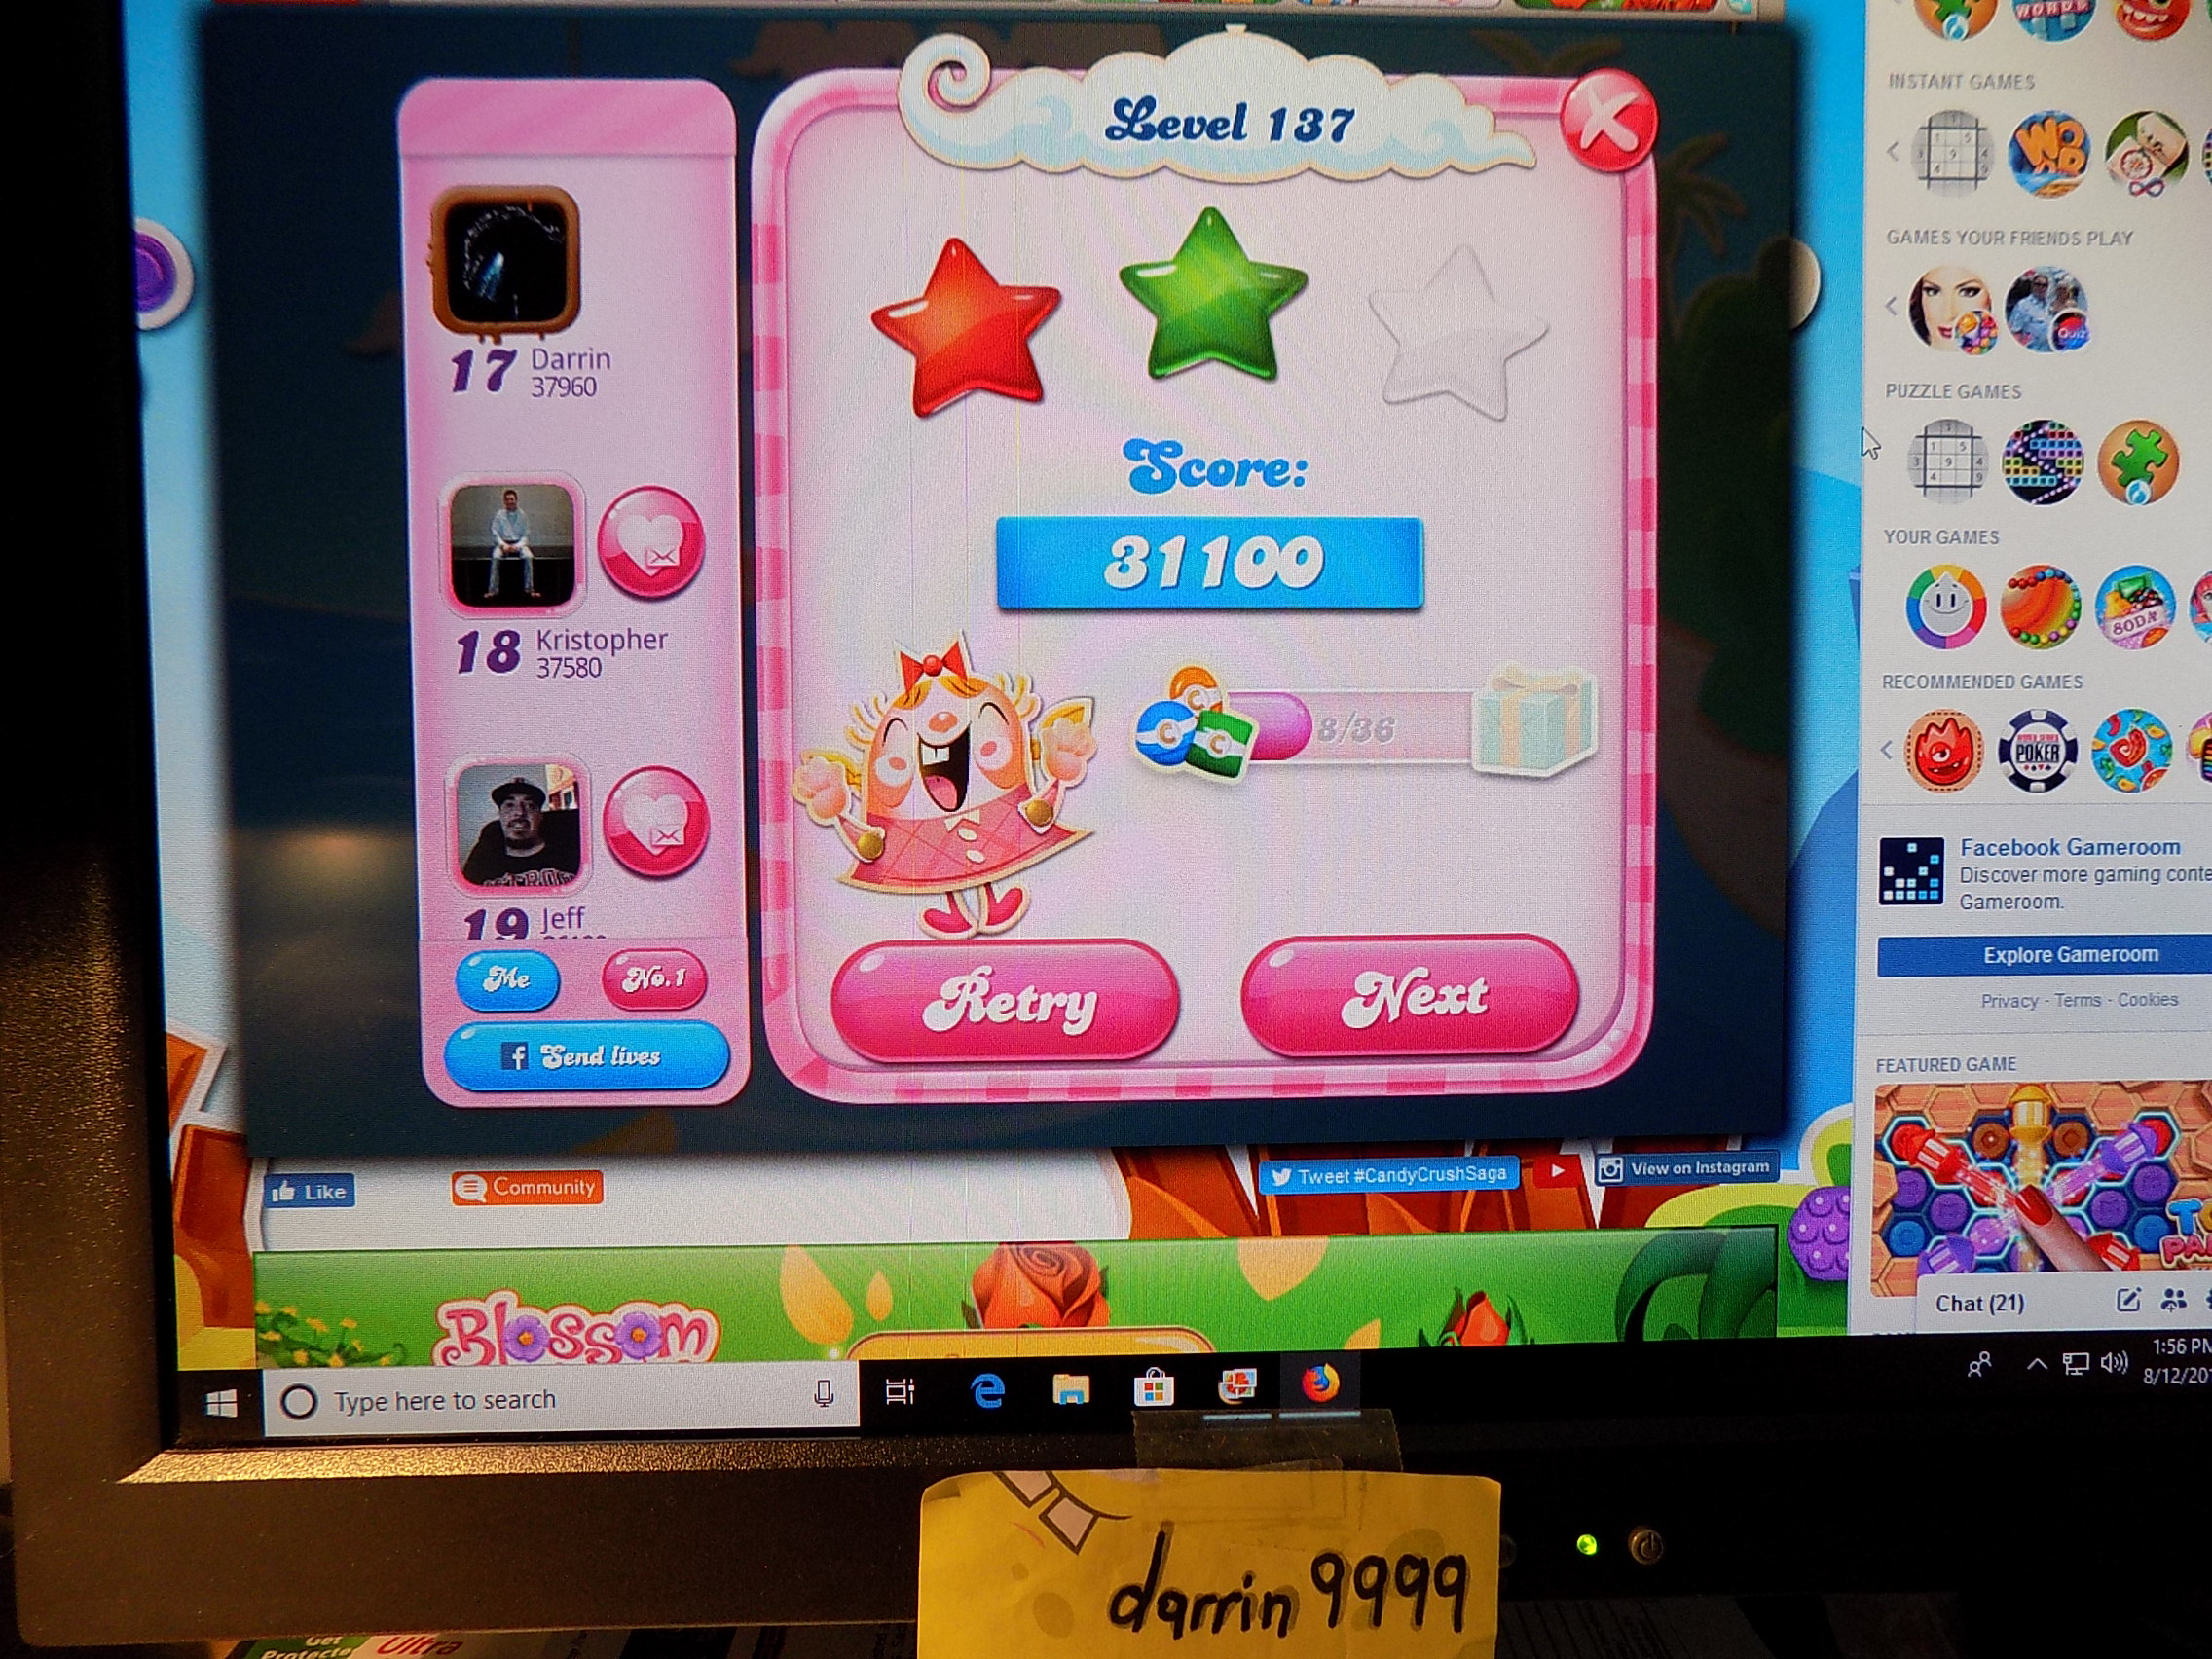 Candy Crush Saga: Level 137 31,100 points